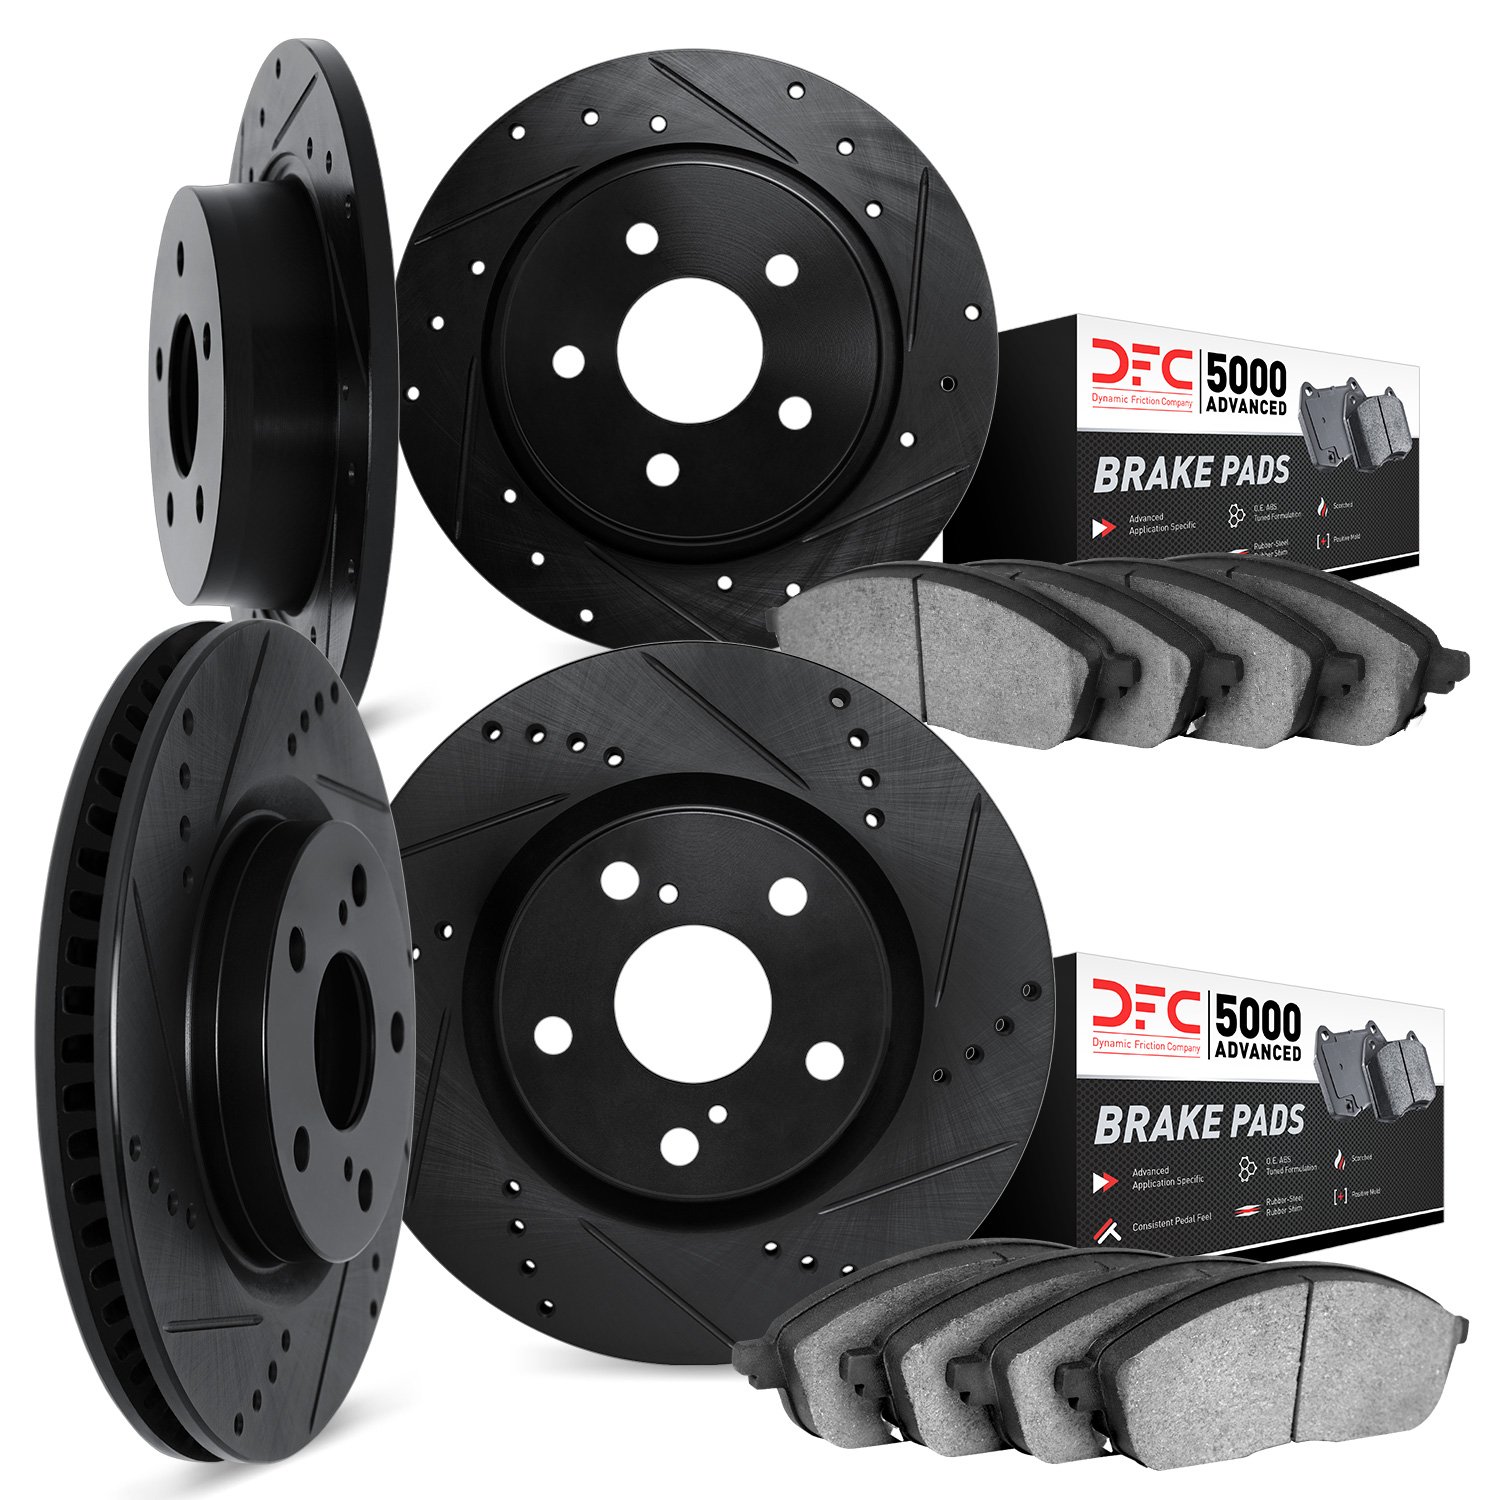 8504-11015 Drilled/Slotted Brake Rotors w/5000 Advanced Brake Pads Kit [Black], 2015-2019 Multiple Makes/Models, Position: Front